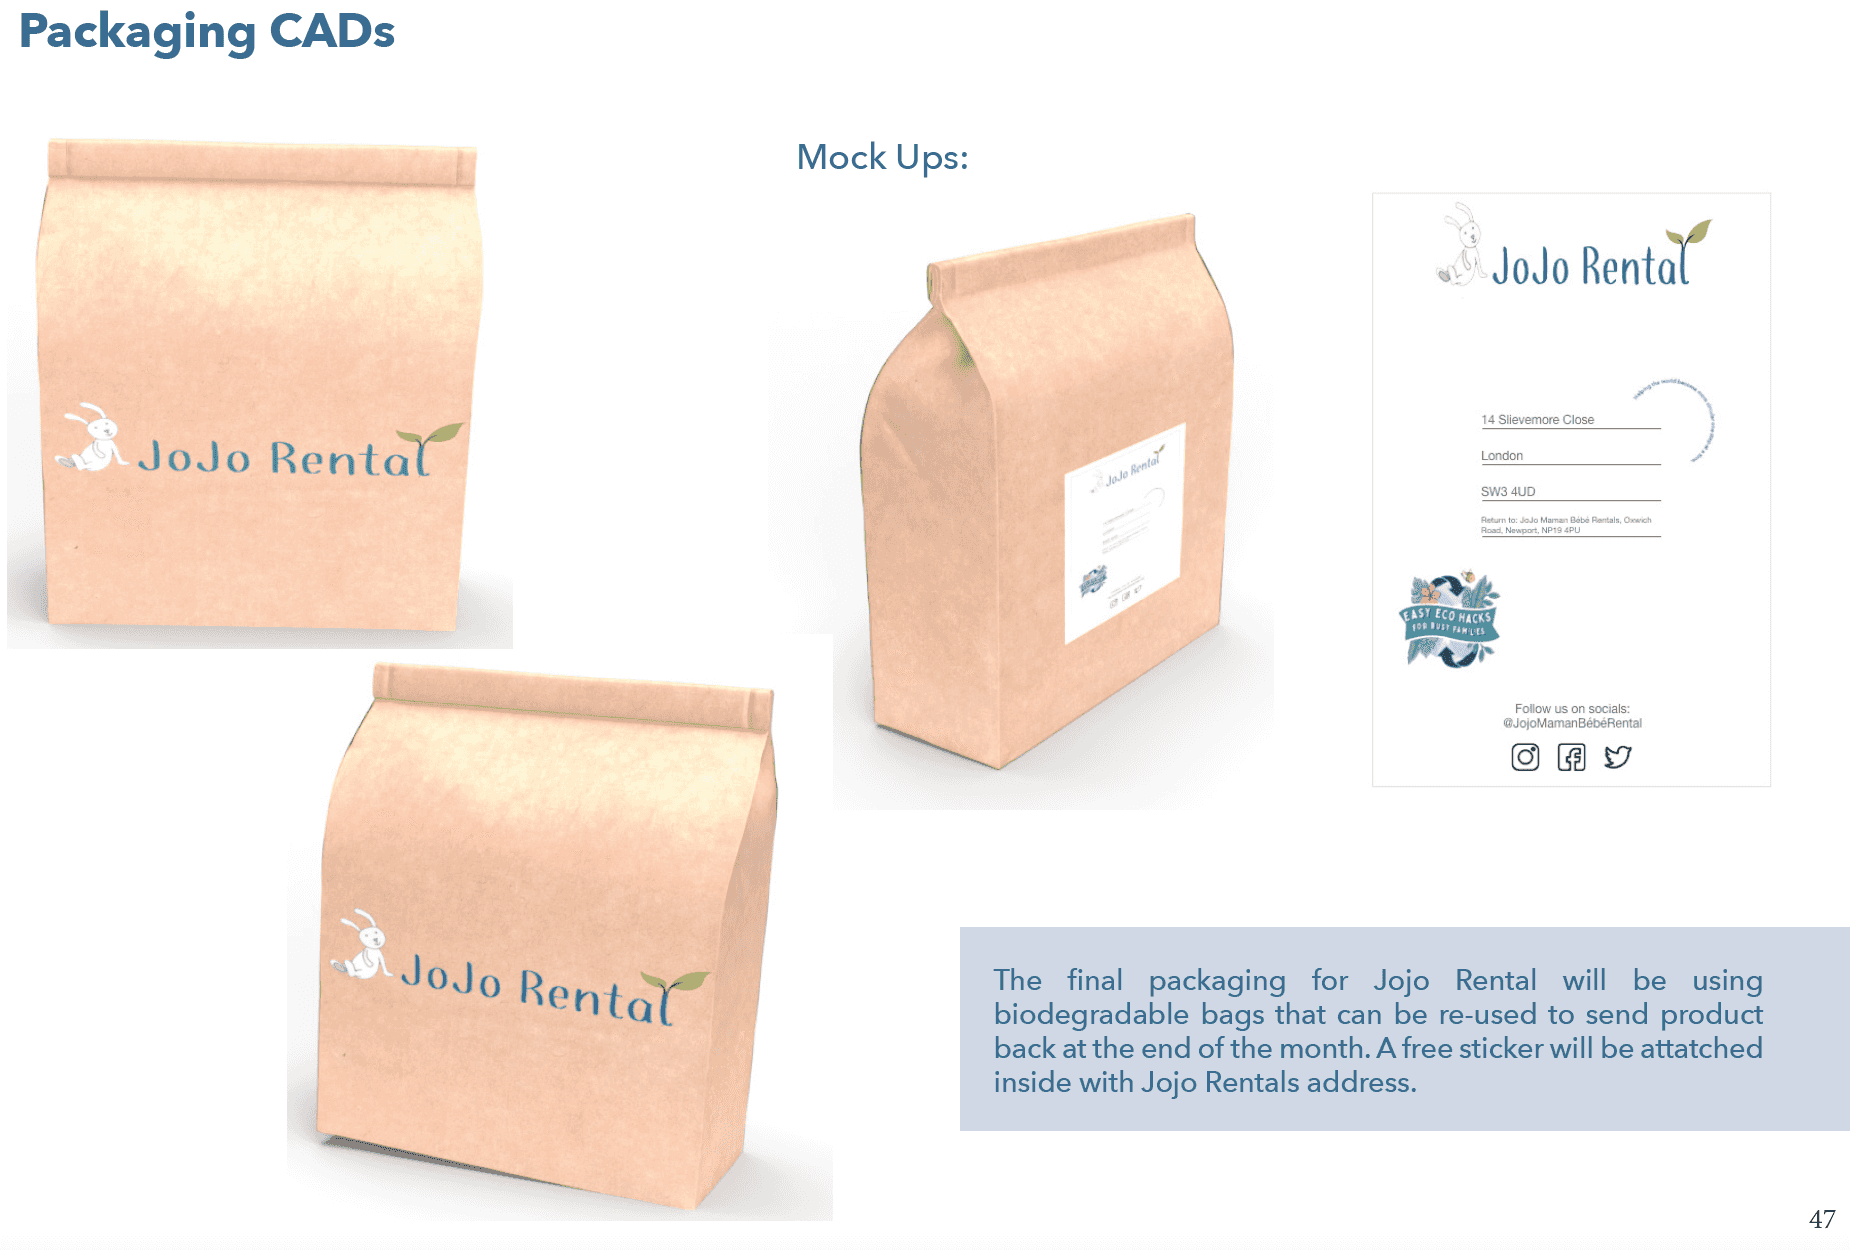 Packaging created for Jojo Rental